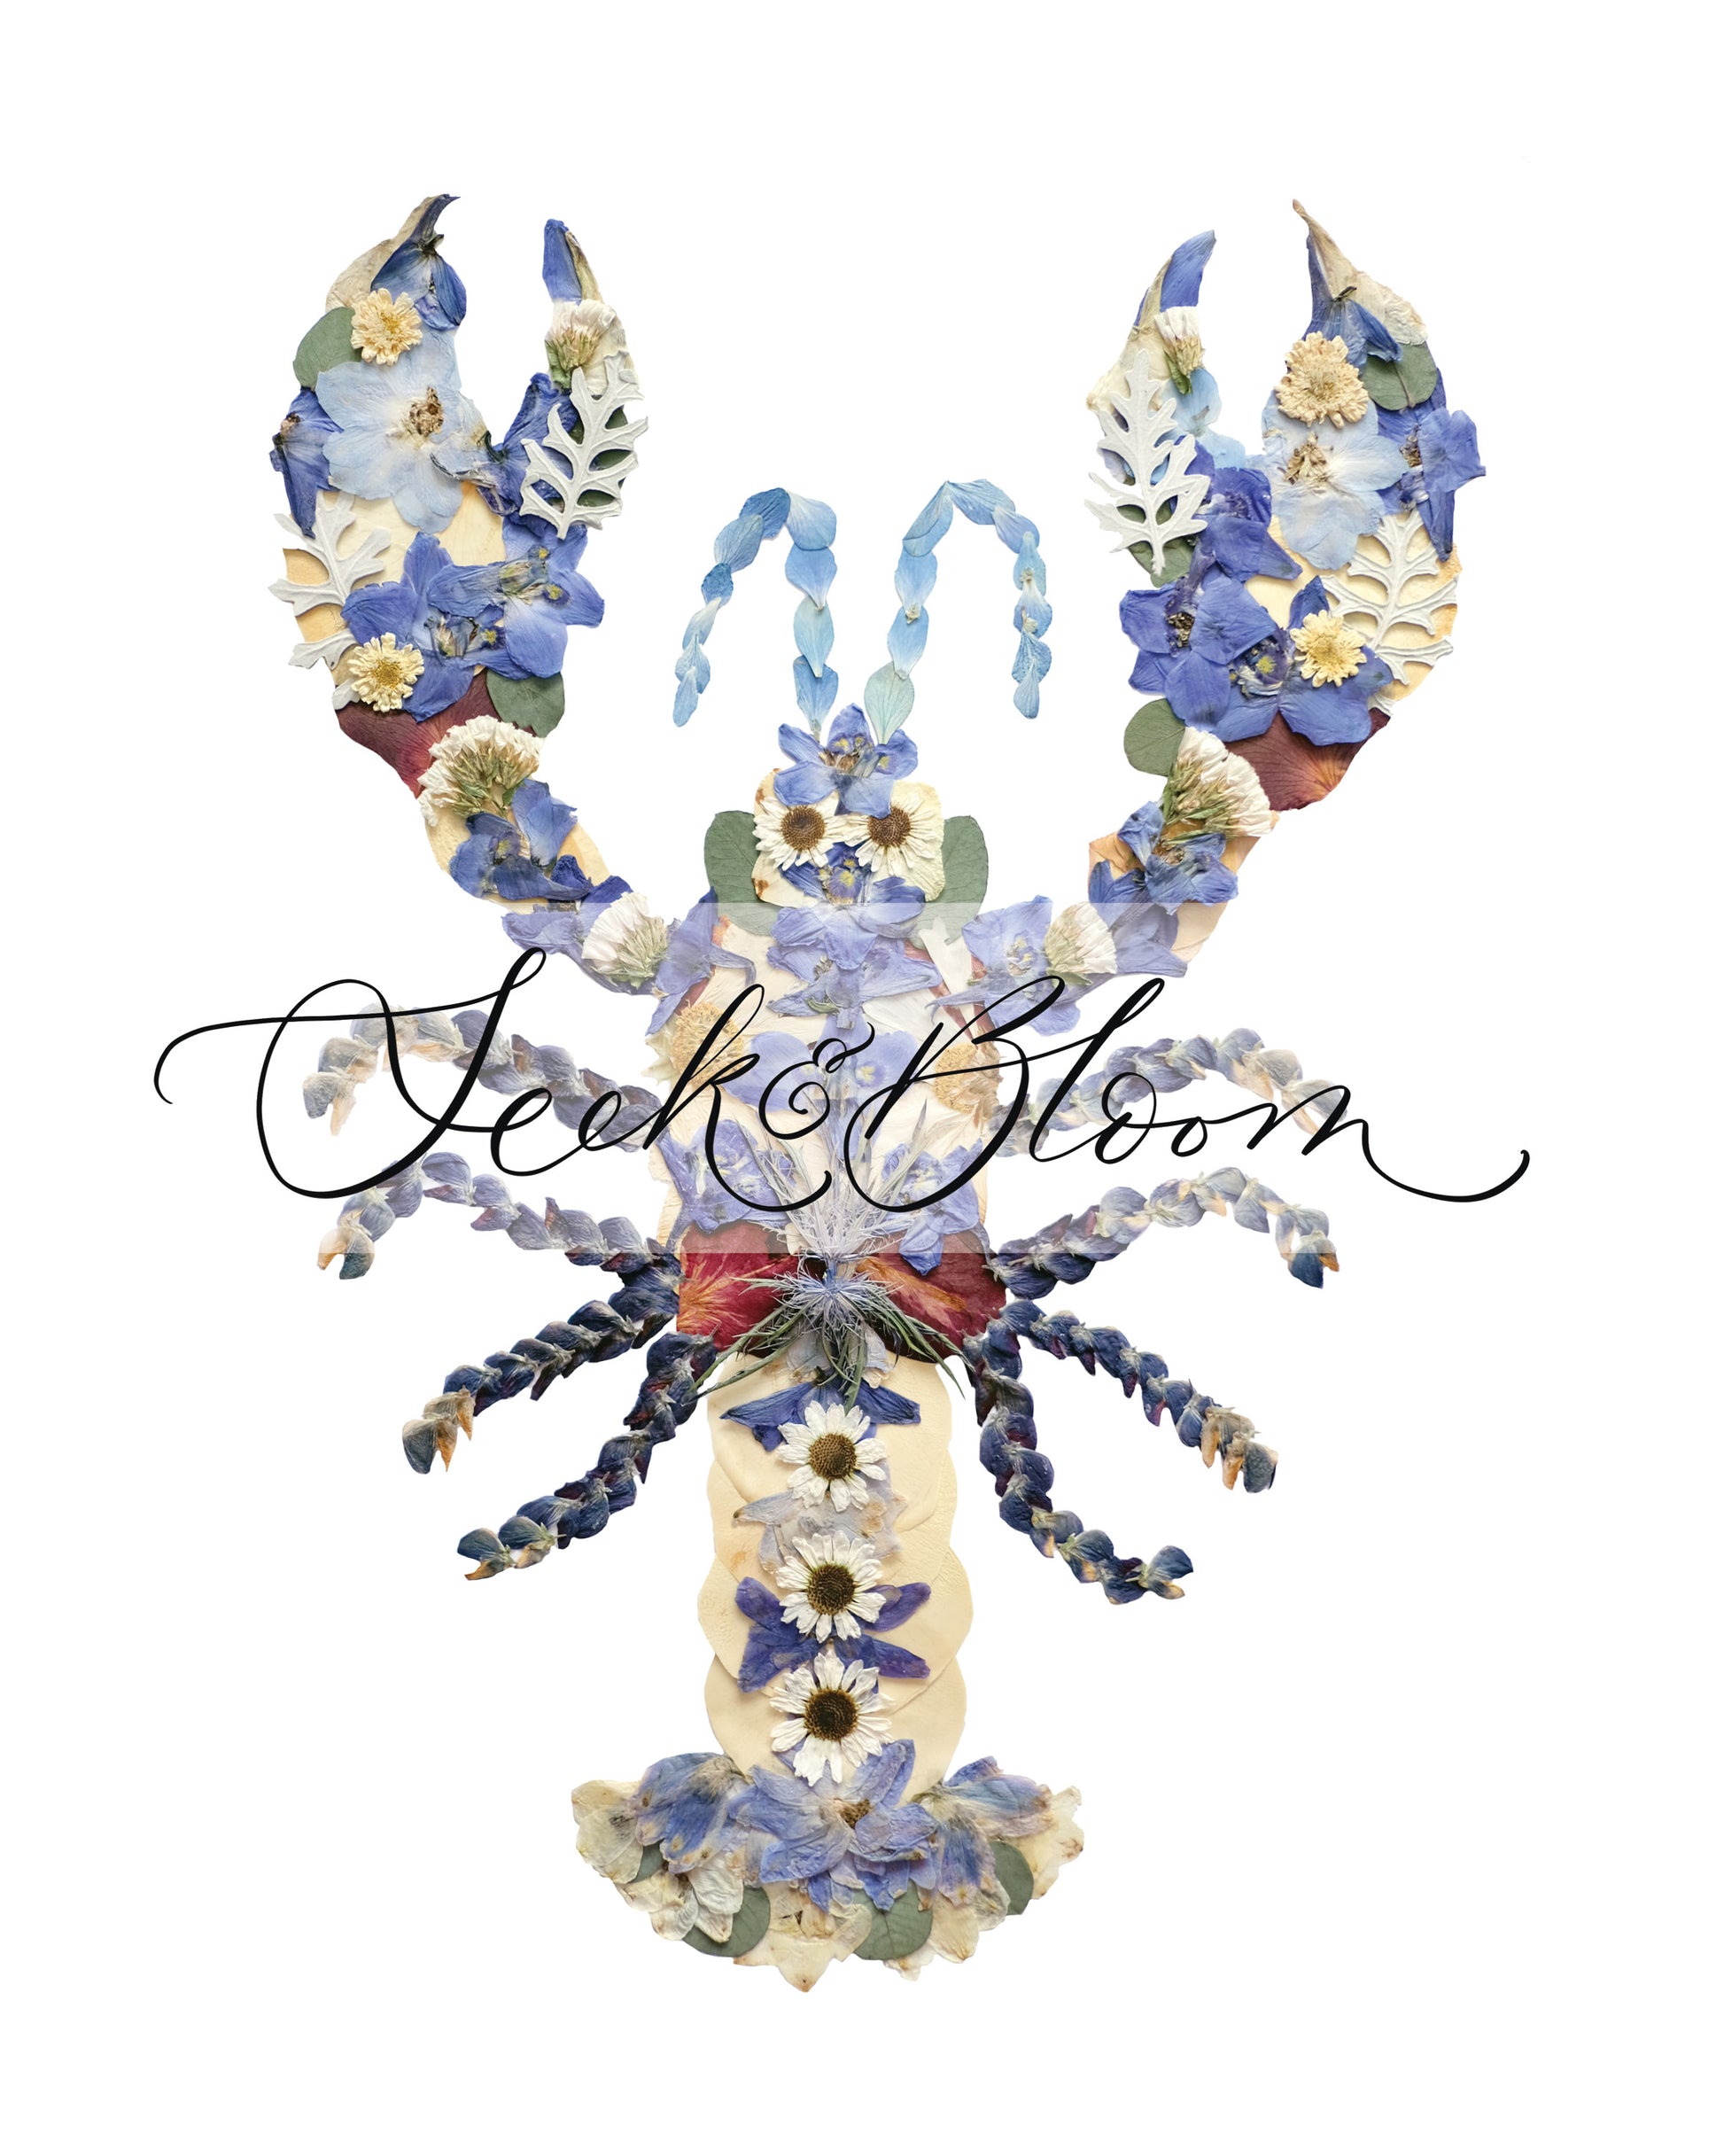 pretty Blue lobster artwork artistic design made with pressed flowers nova scotia lobster